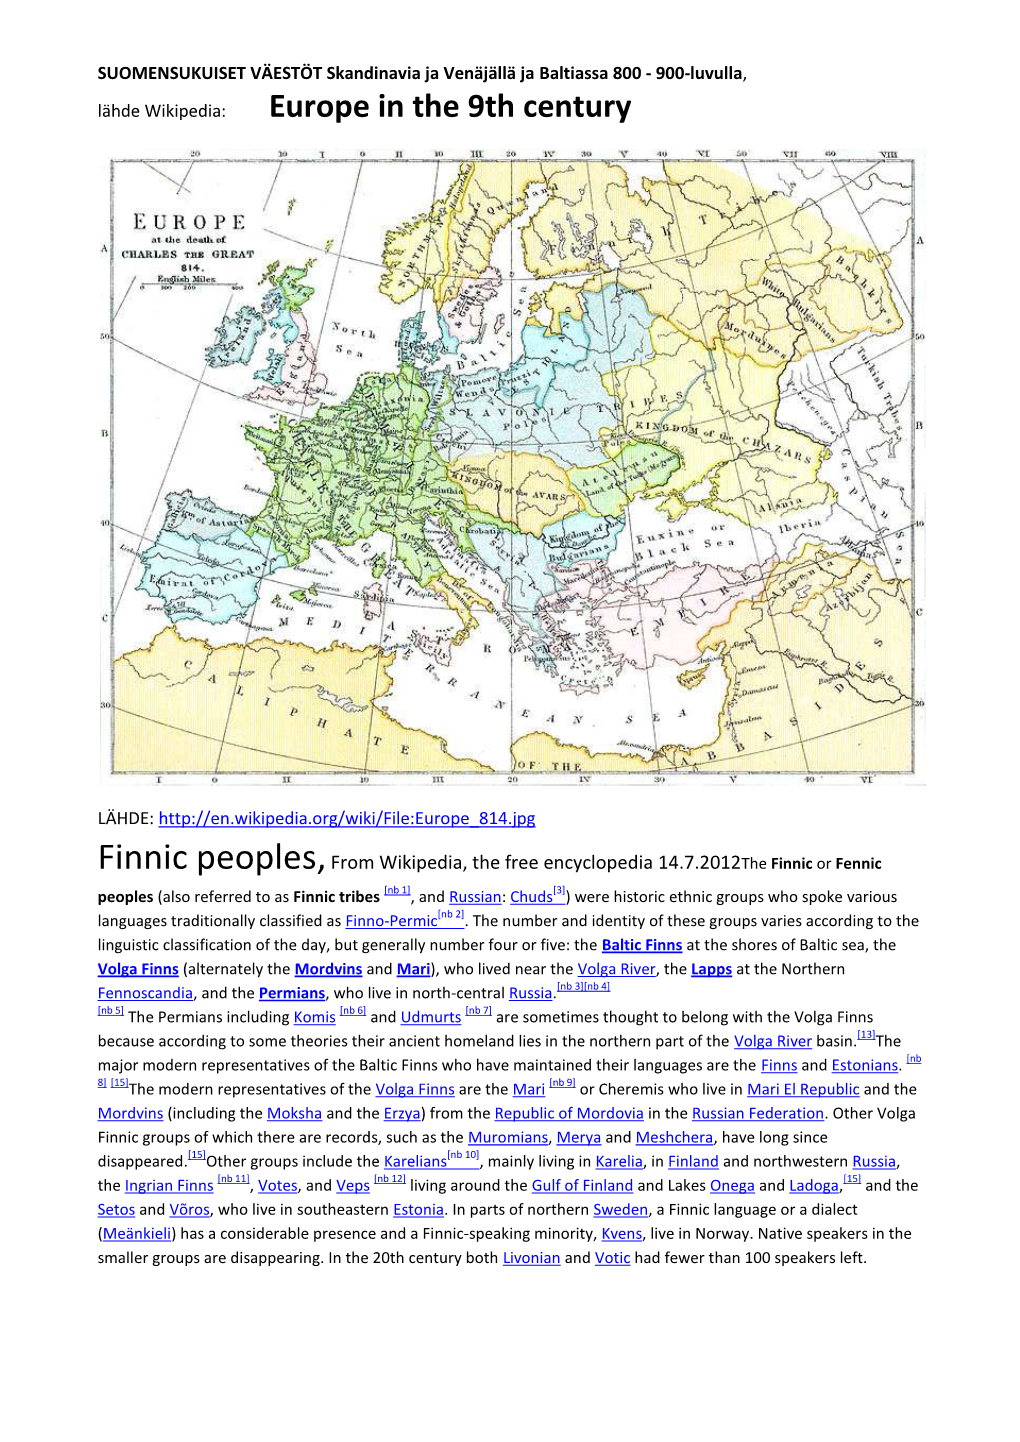 Lähde Wikipedia: Europe in the 9Th Century